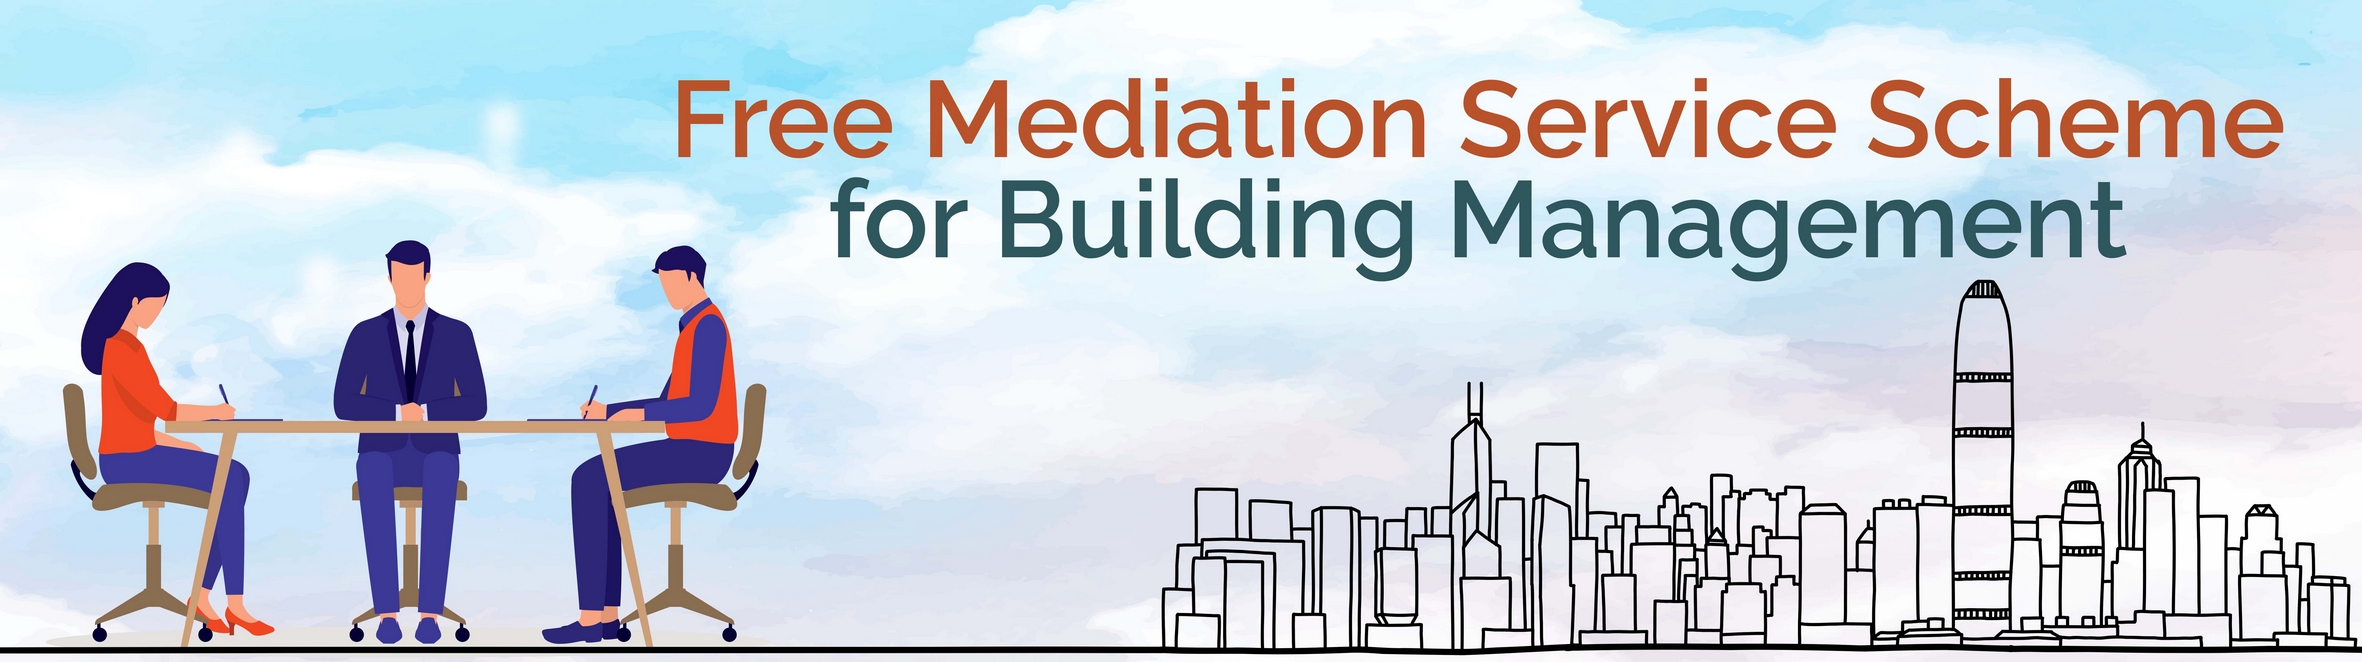 Free Mediation Service Scheme for Building Management